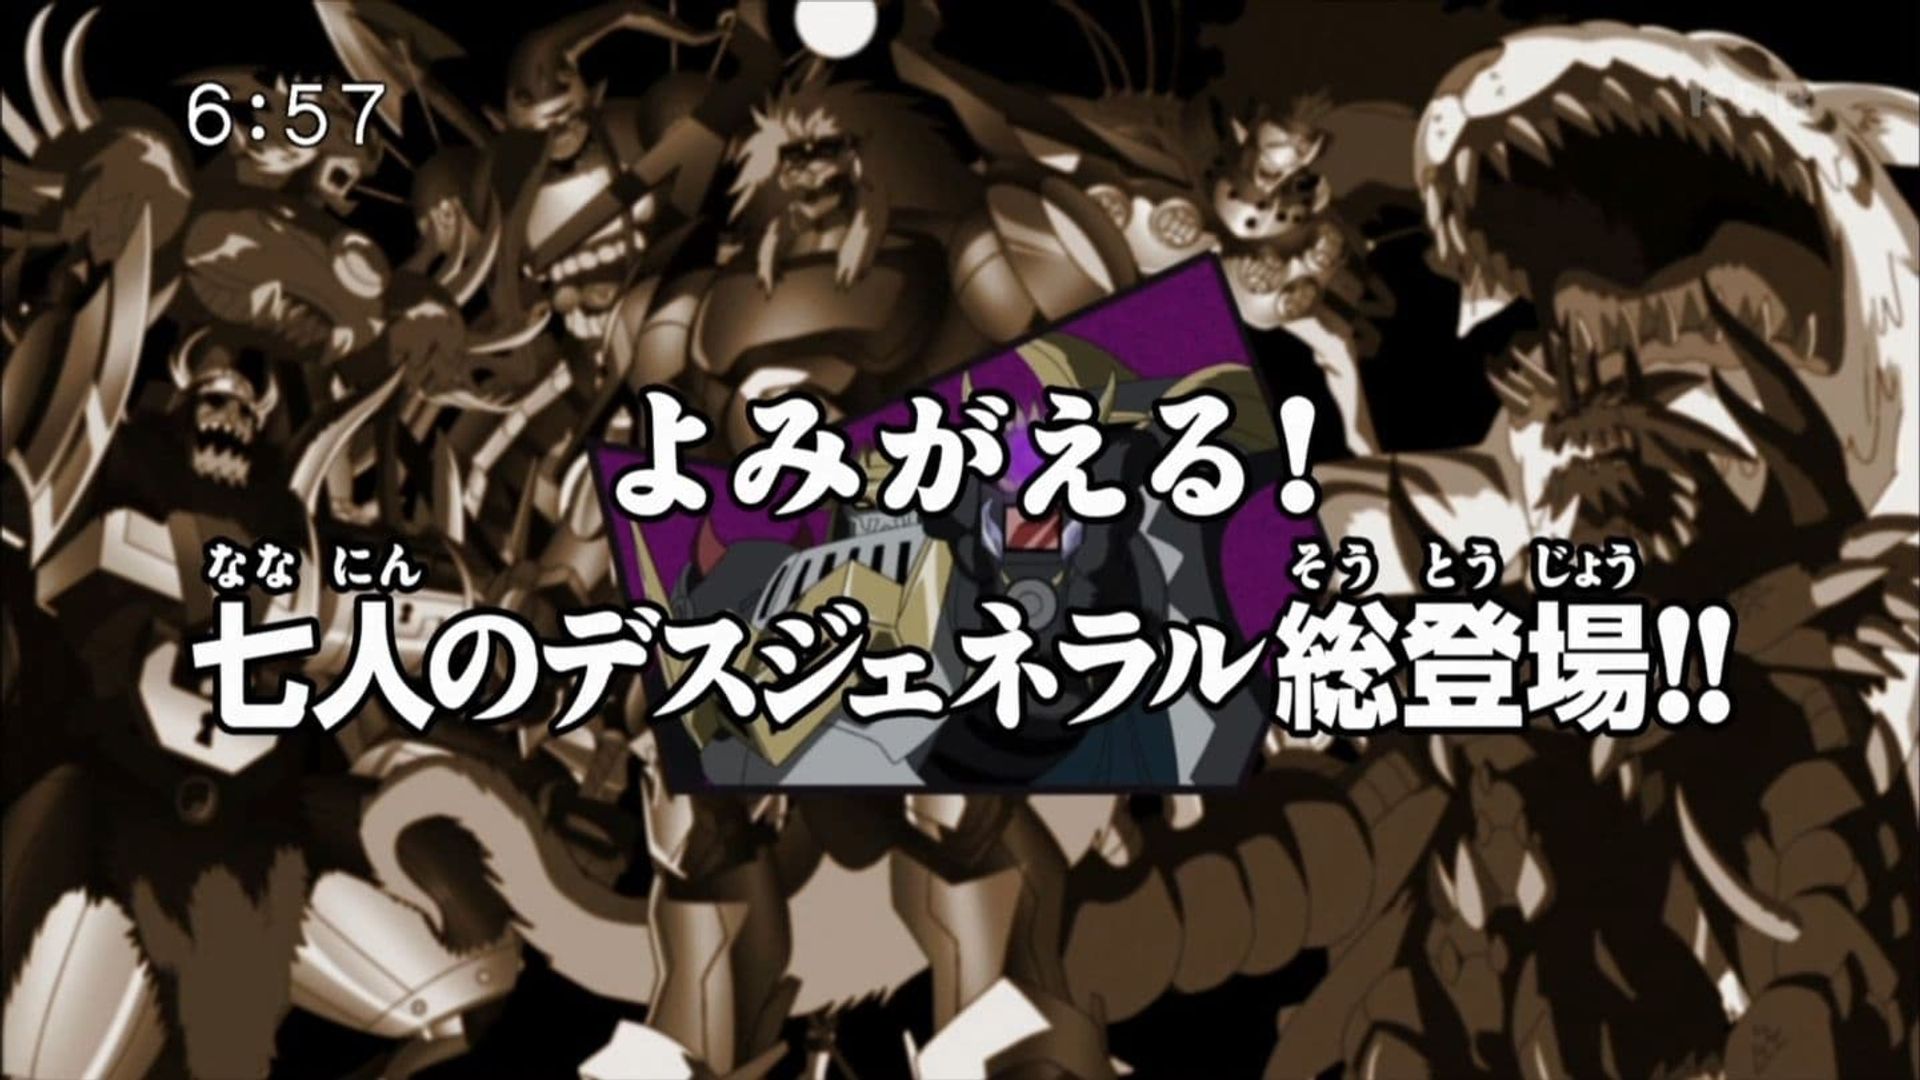 Digimon Xros Wars background